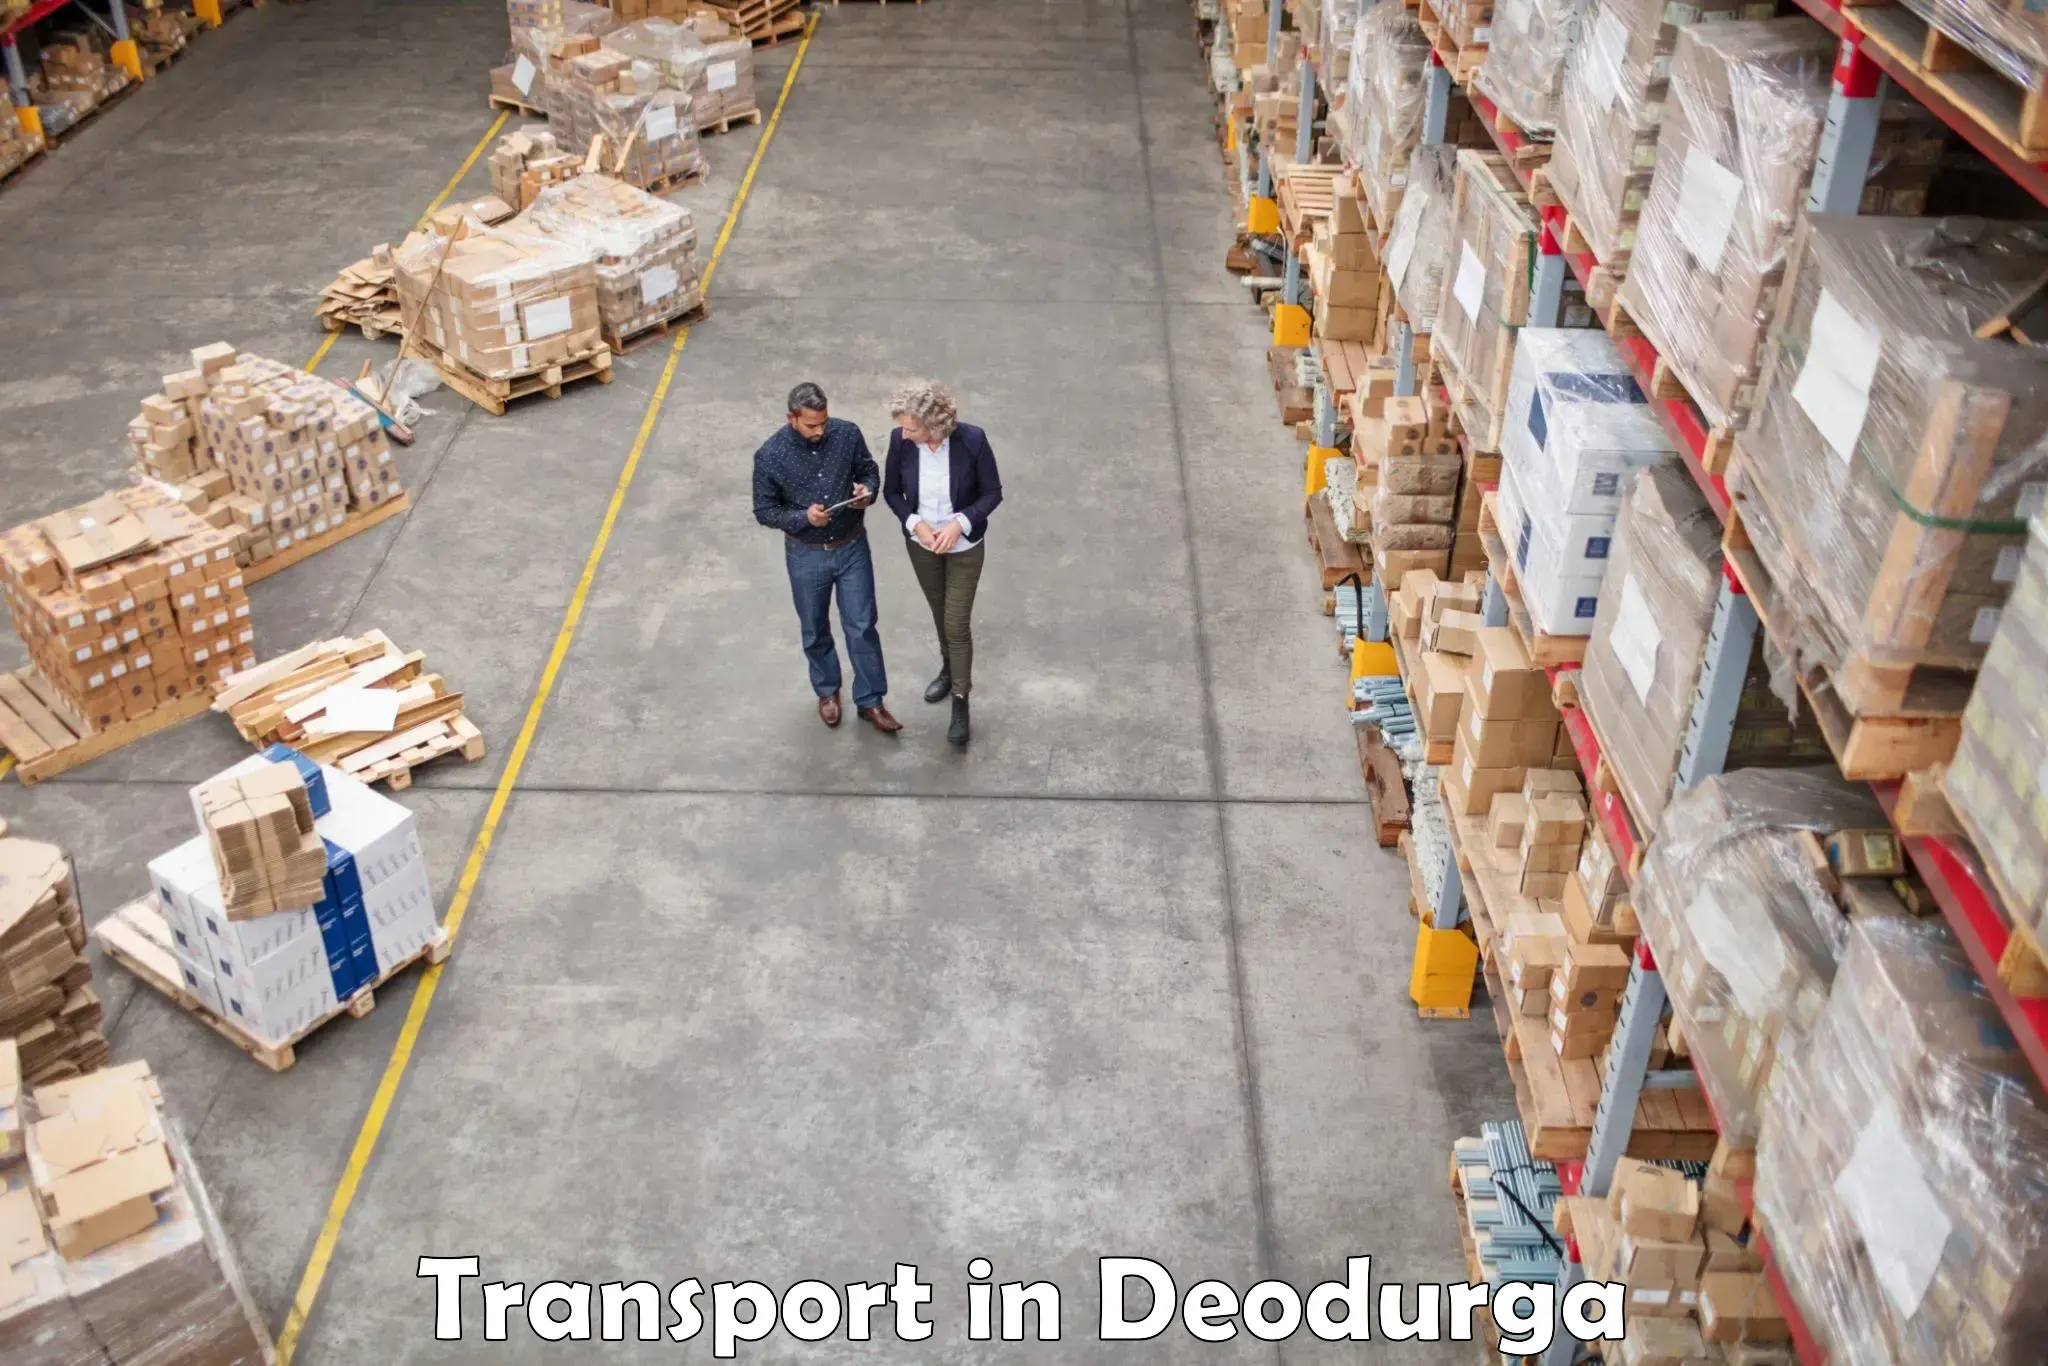 Delivery service in Deodurga